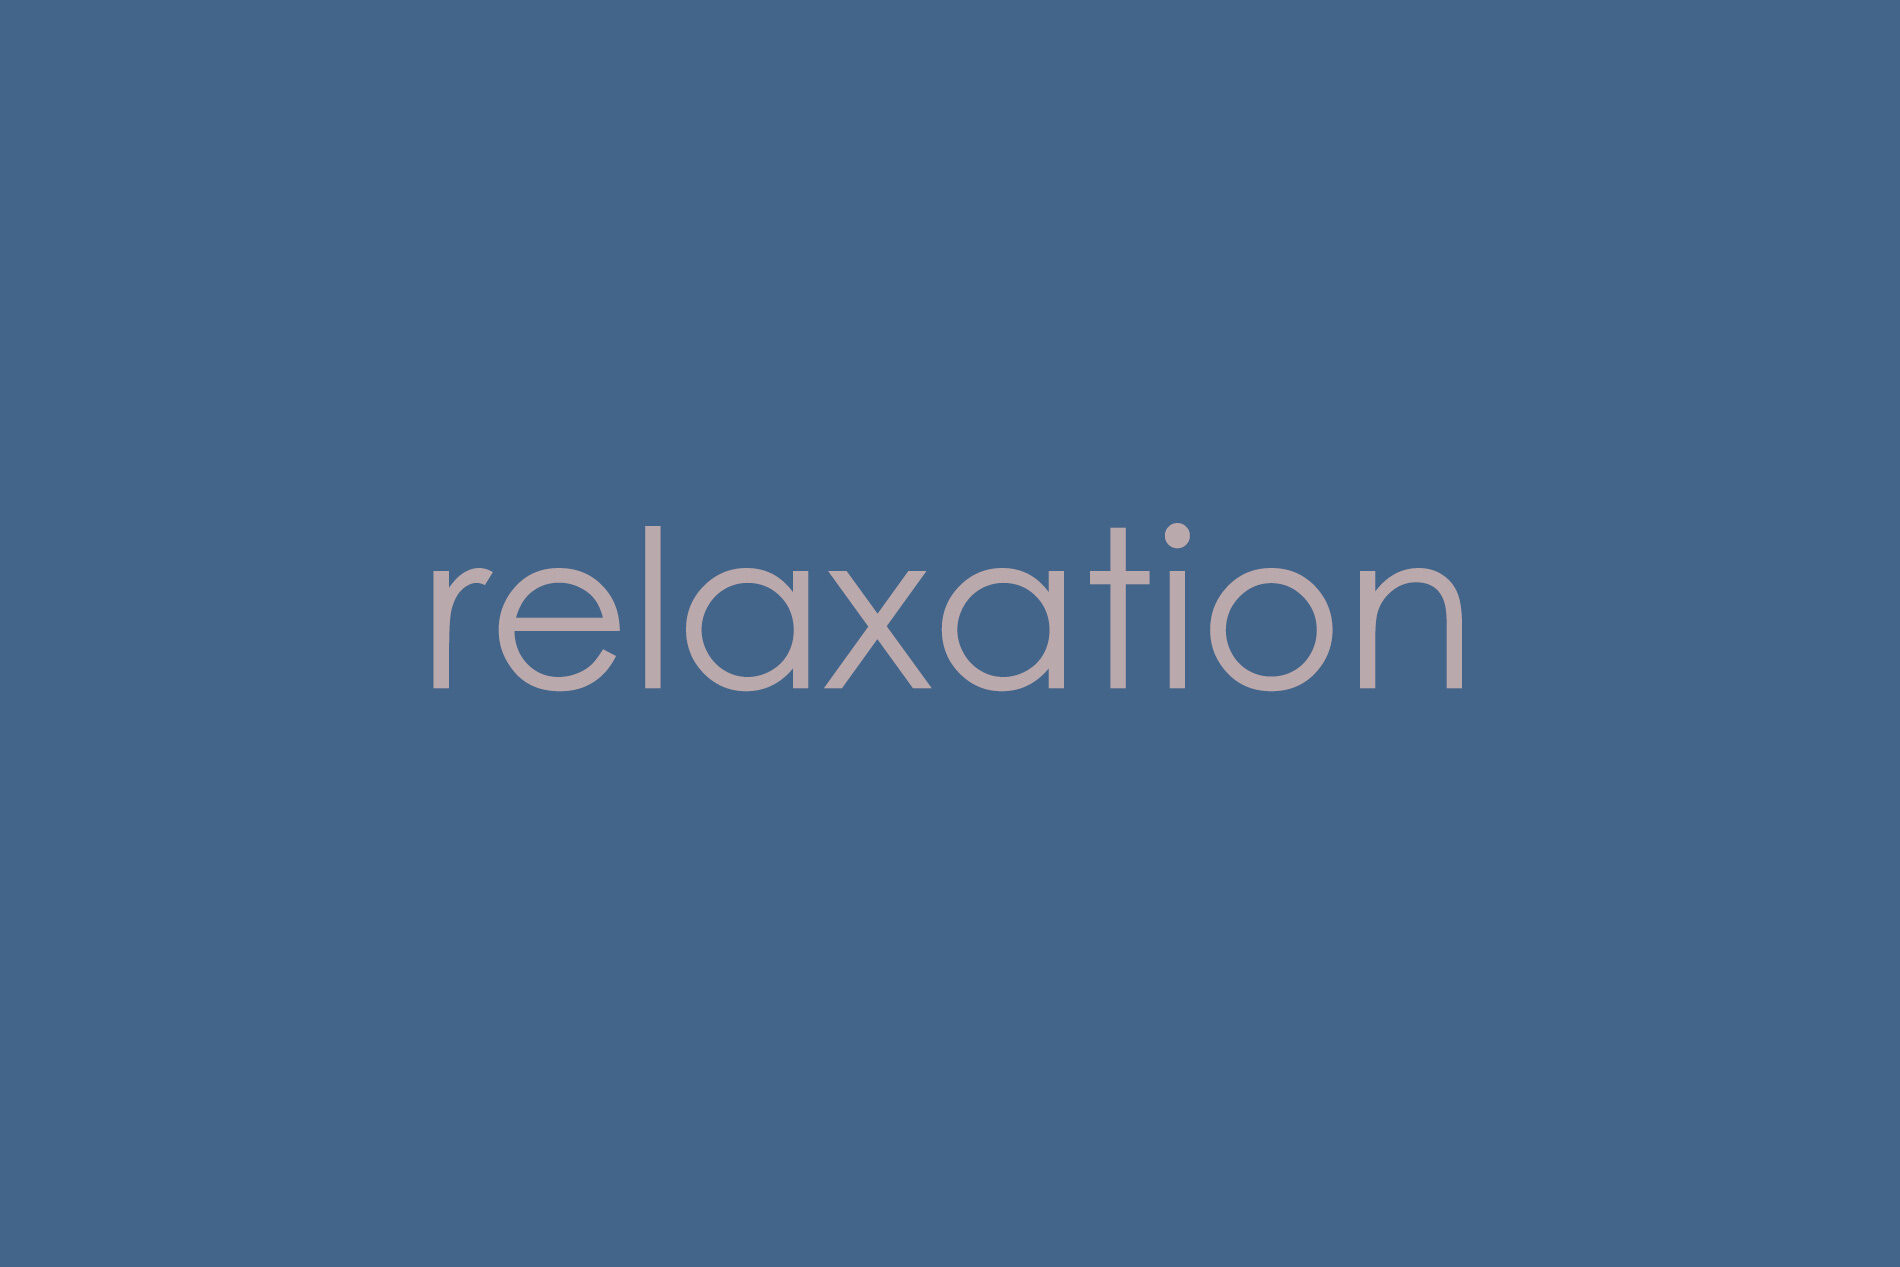 relaxation_copyright_broad_dayligh.jpg